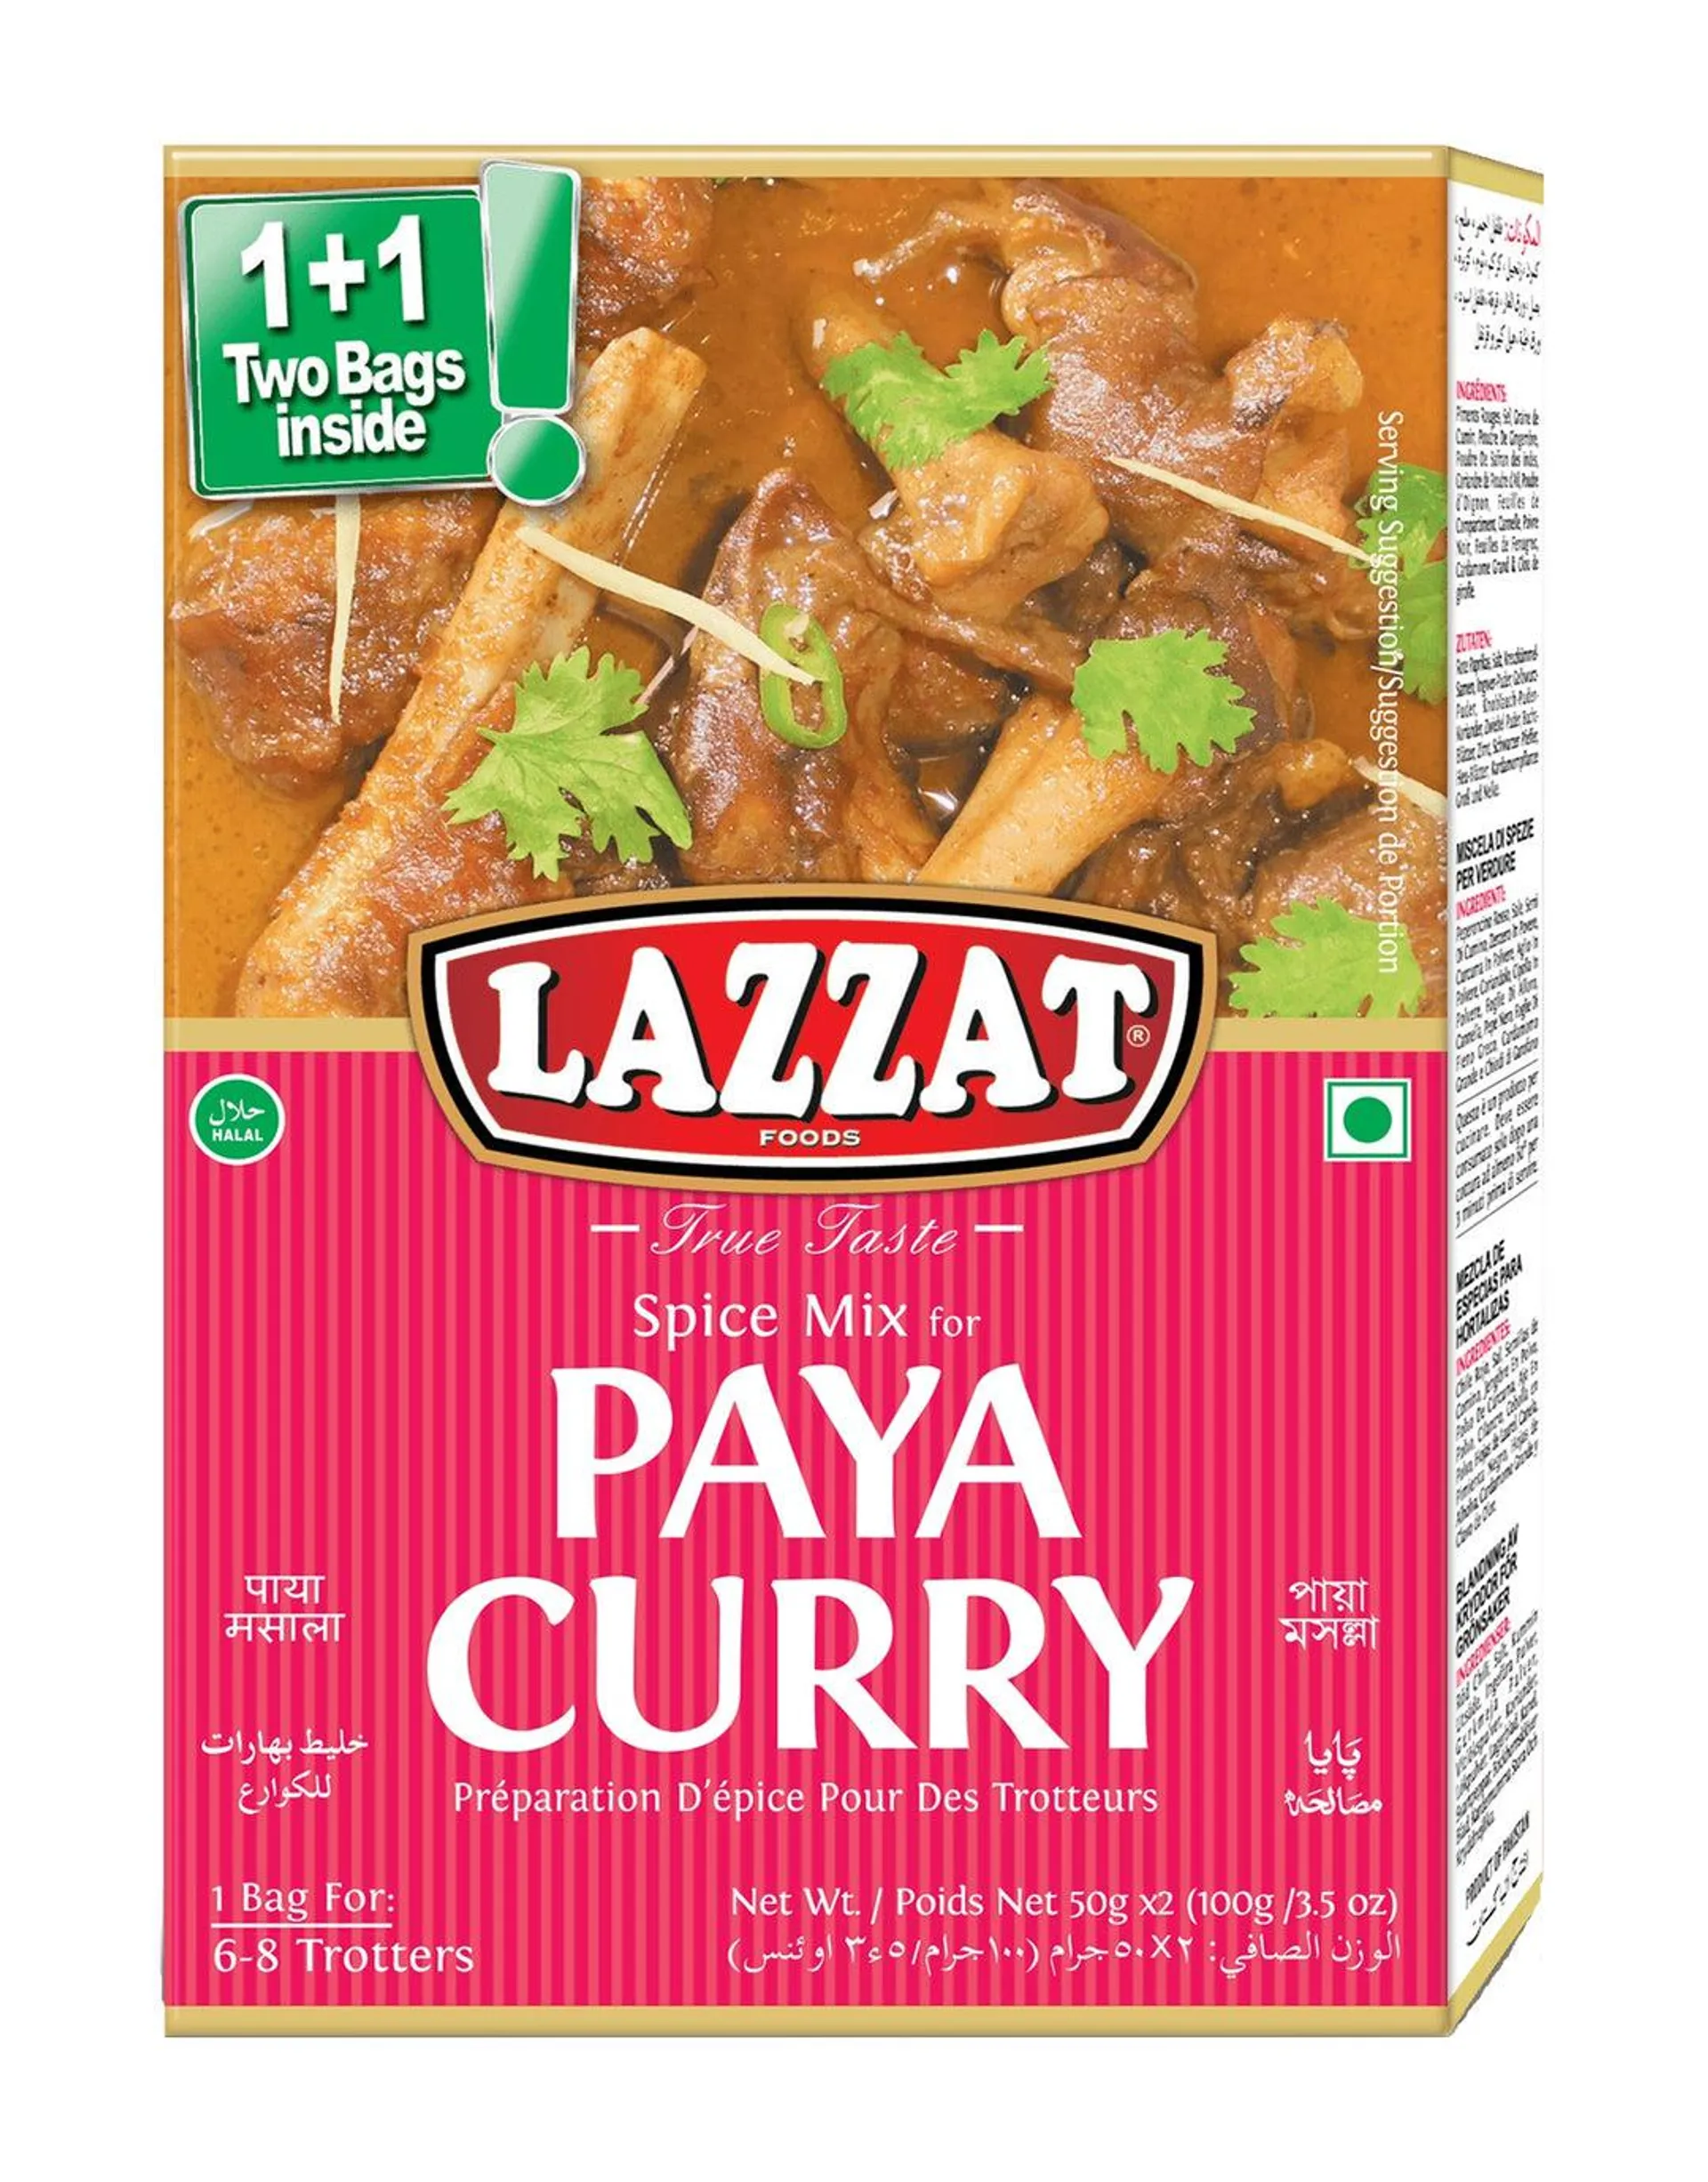 Lazzat SP Paya curry 100g